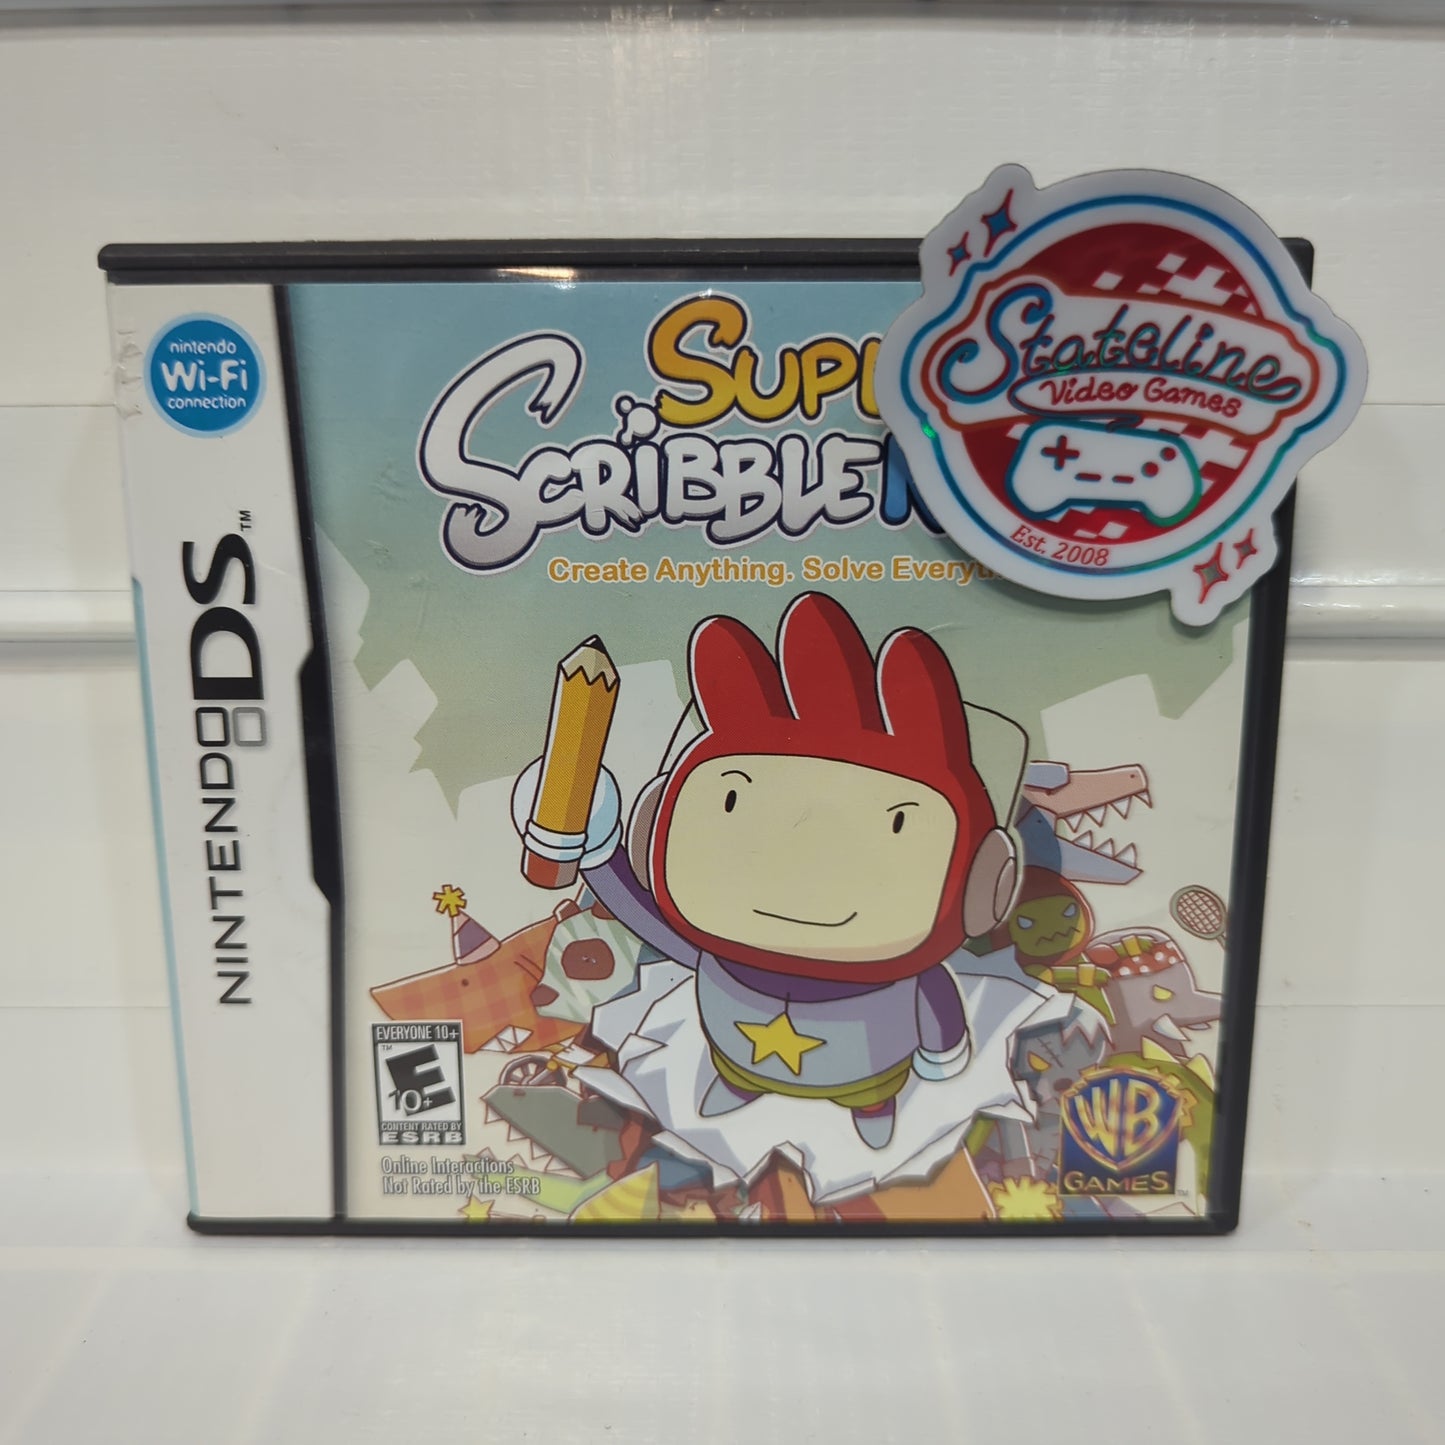 Super Scribblenauts - Nintendo DS